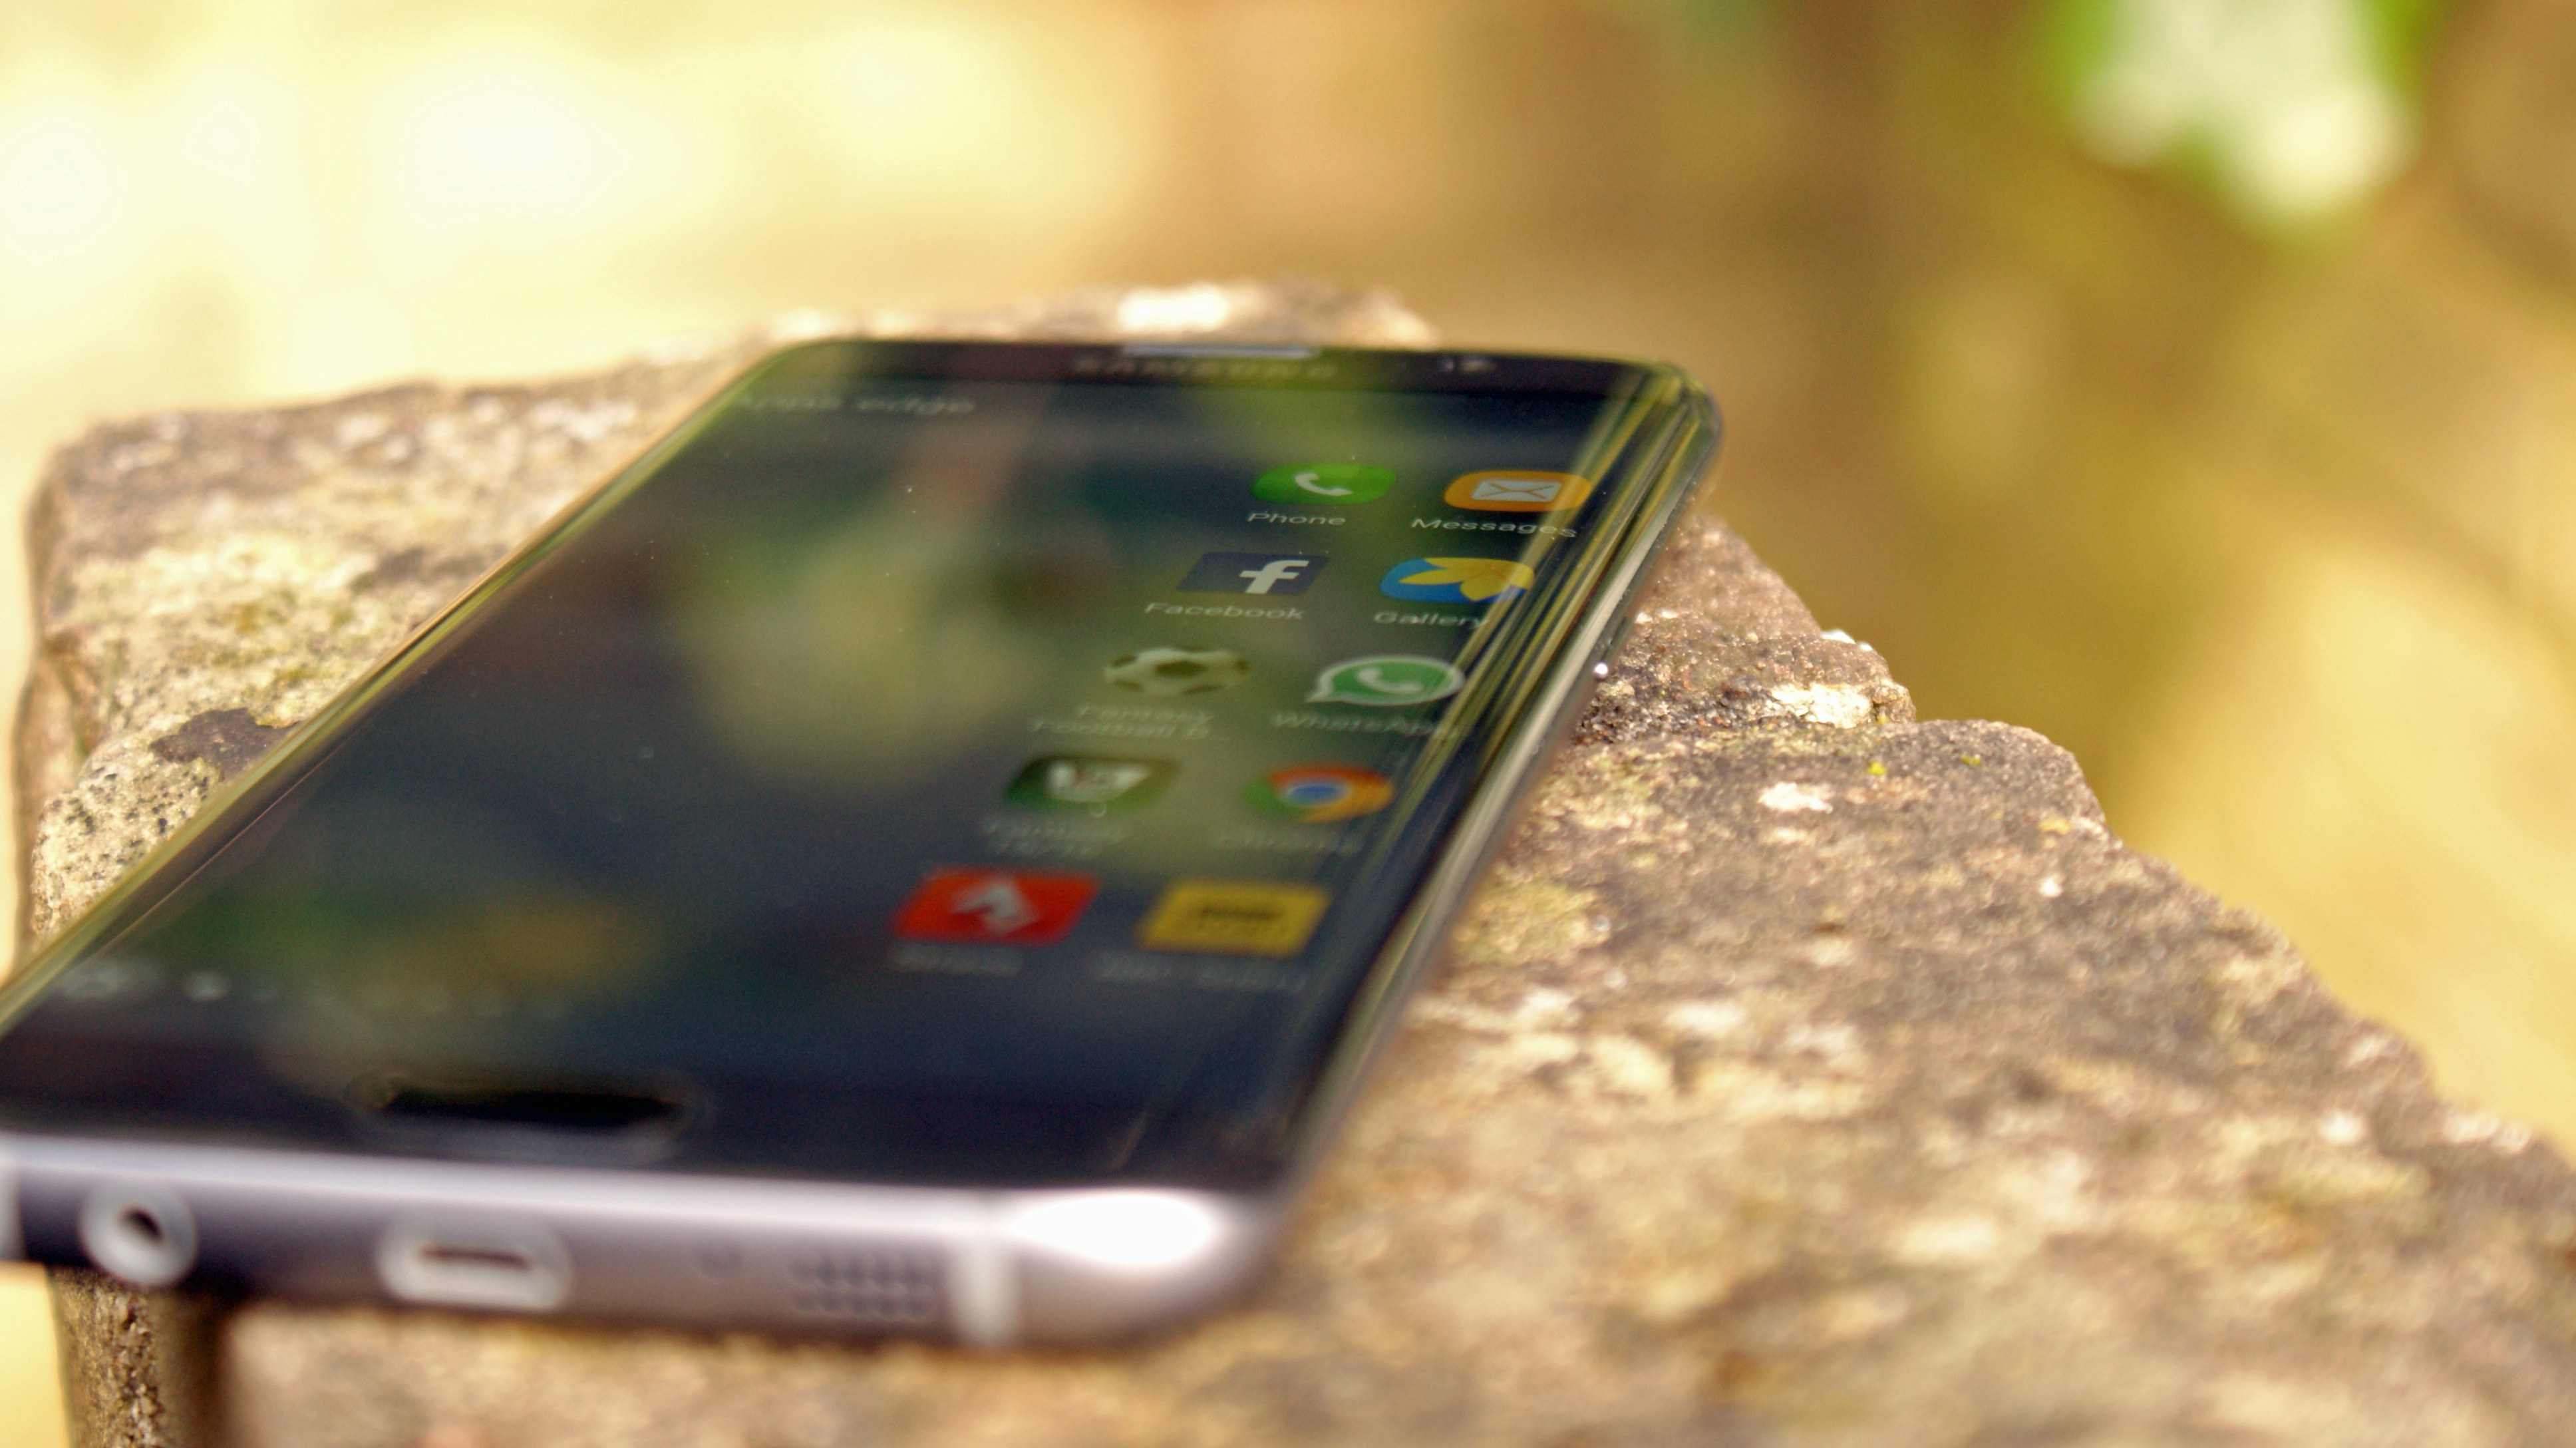 Kosciuszko Tag fat drag Samsung Galaxy S7 Edge review | TechRadar